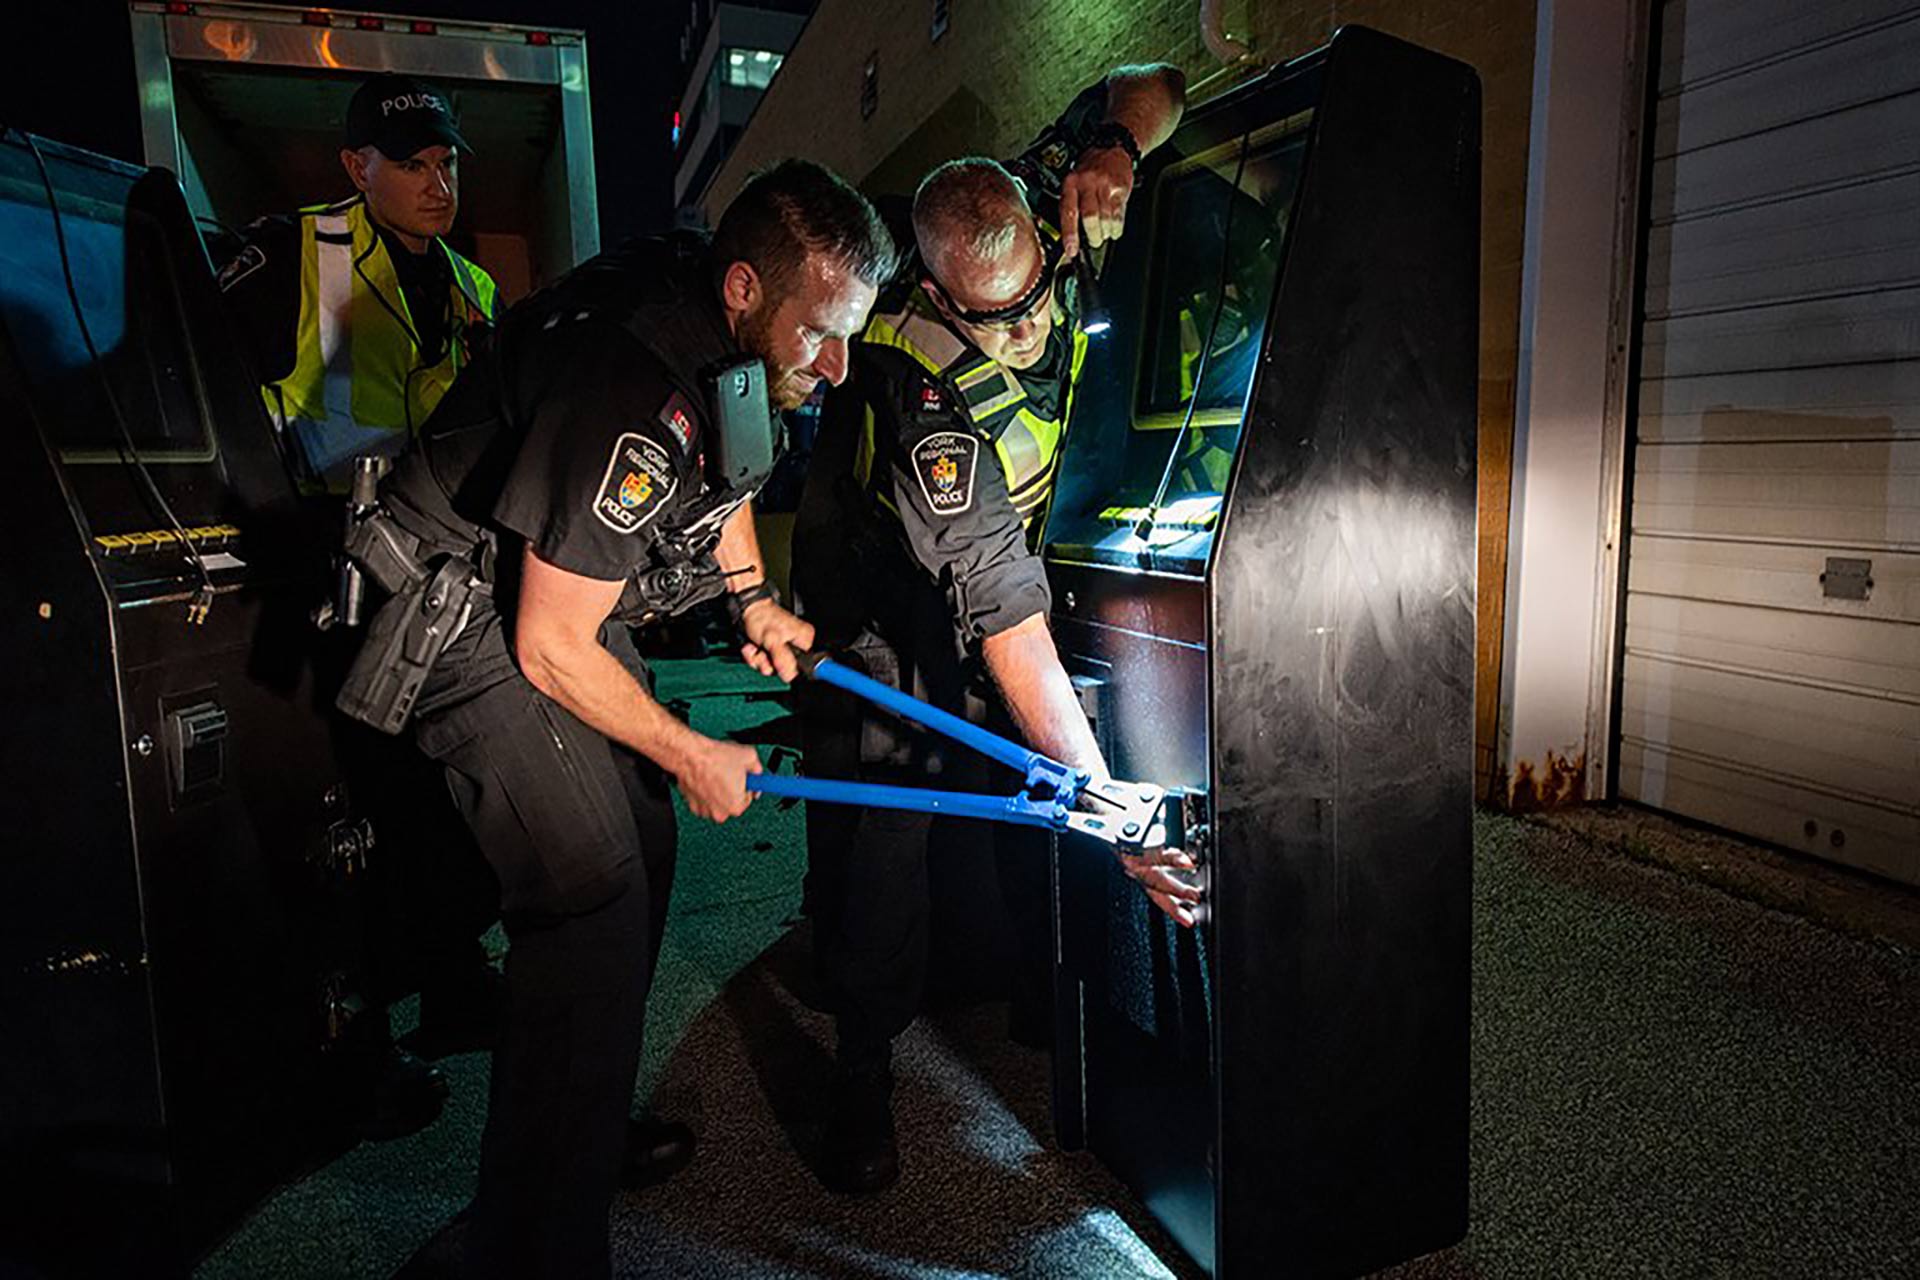 Police open a gaming machine eiqduidtzidexinv